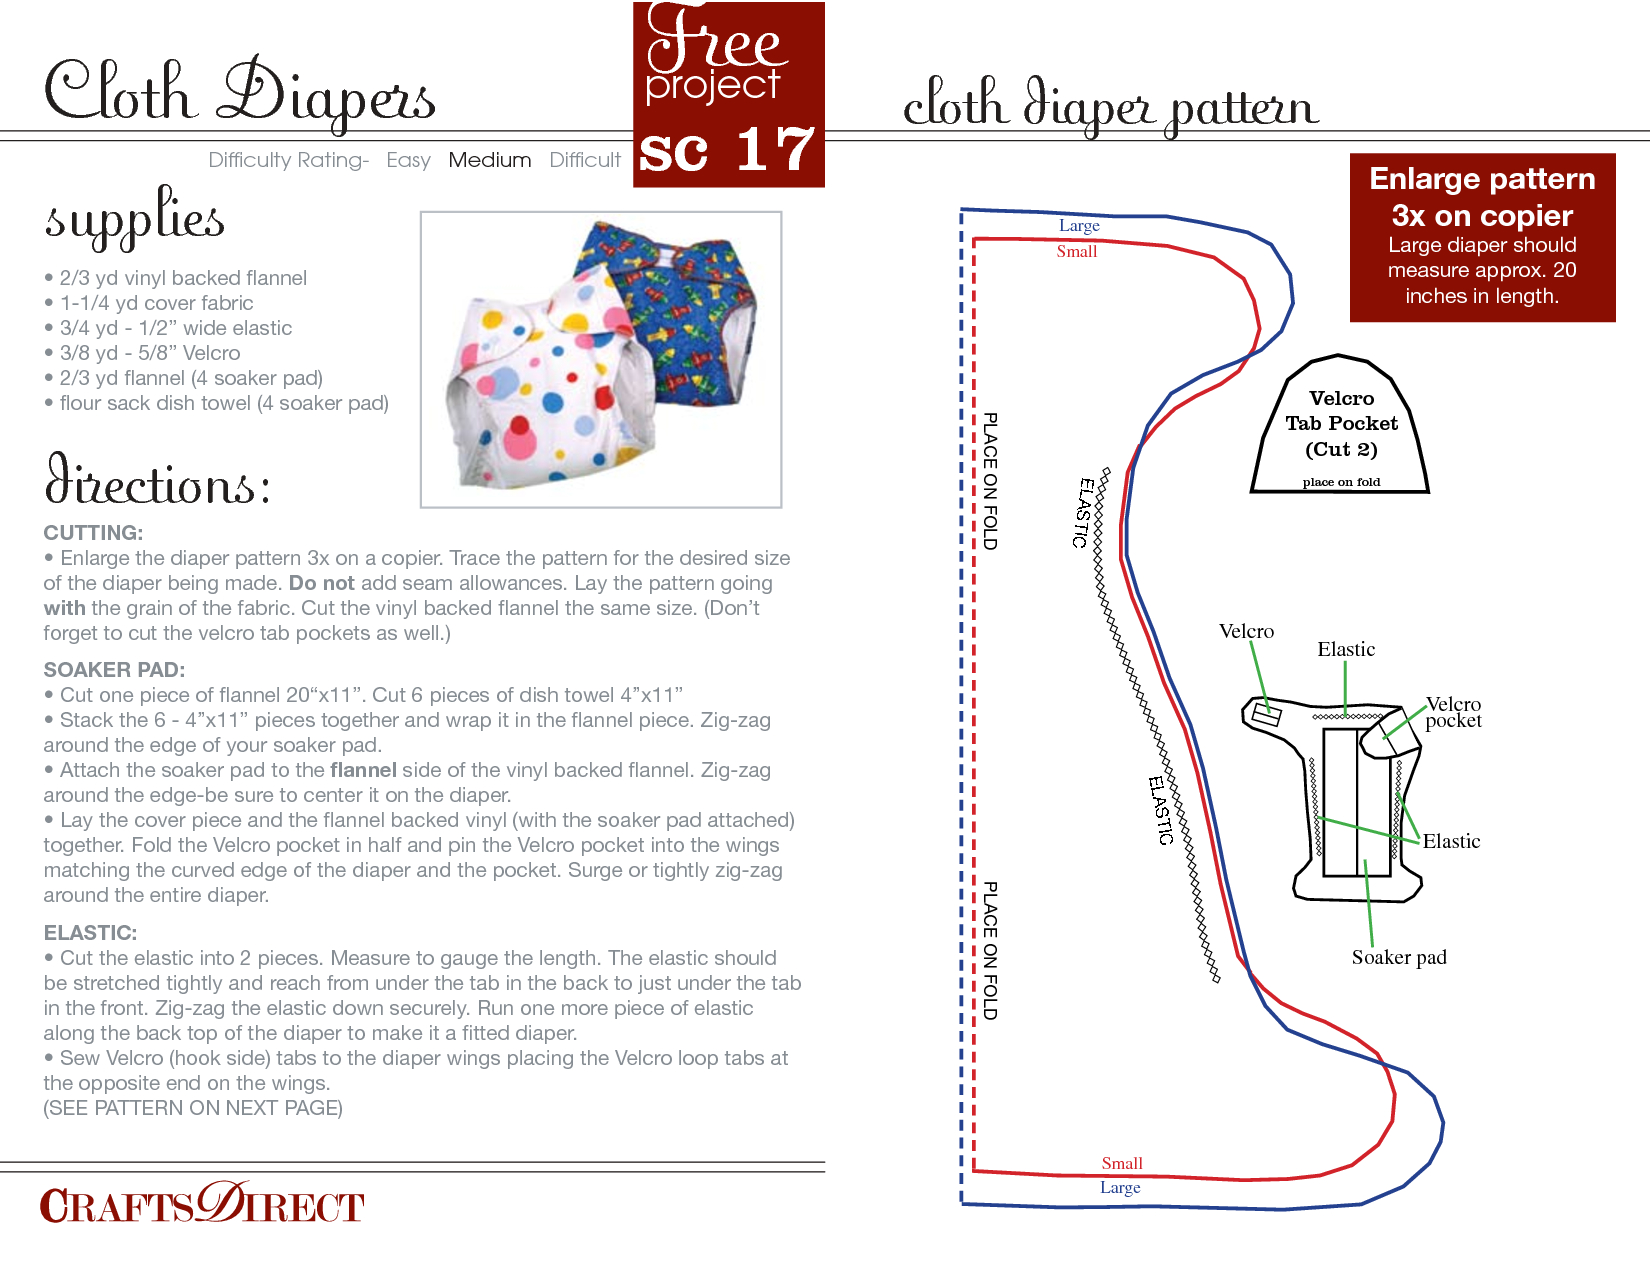 Free Cloth Diaper Patterns | Cloth Diaper Pattern_My Free Diaper - Cloth Diaper Pattern Free Printable